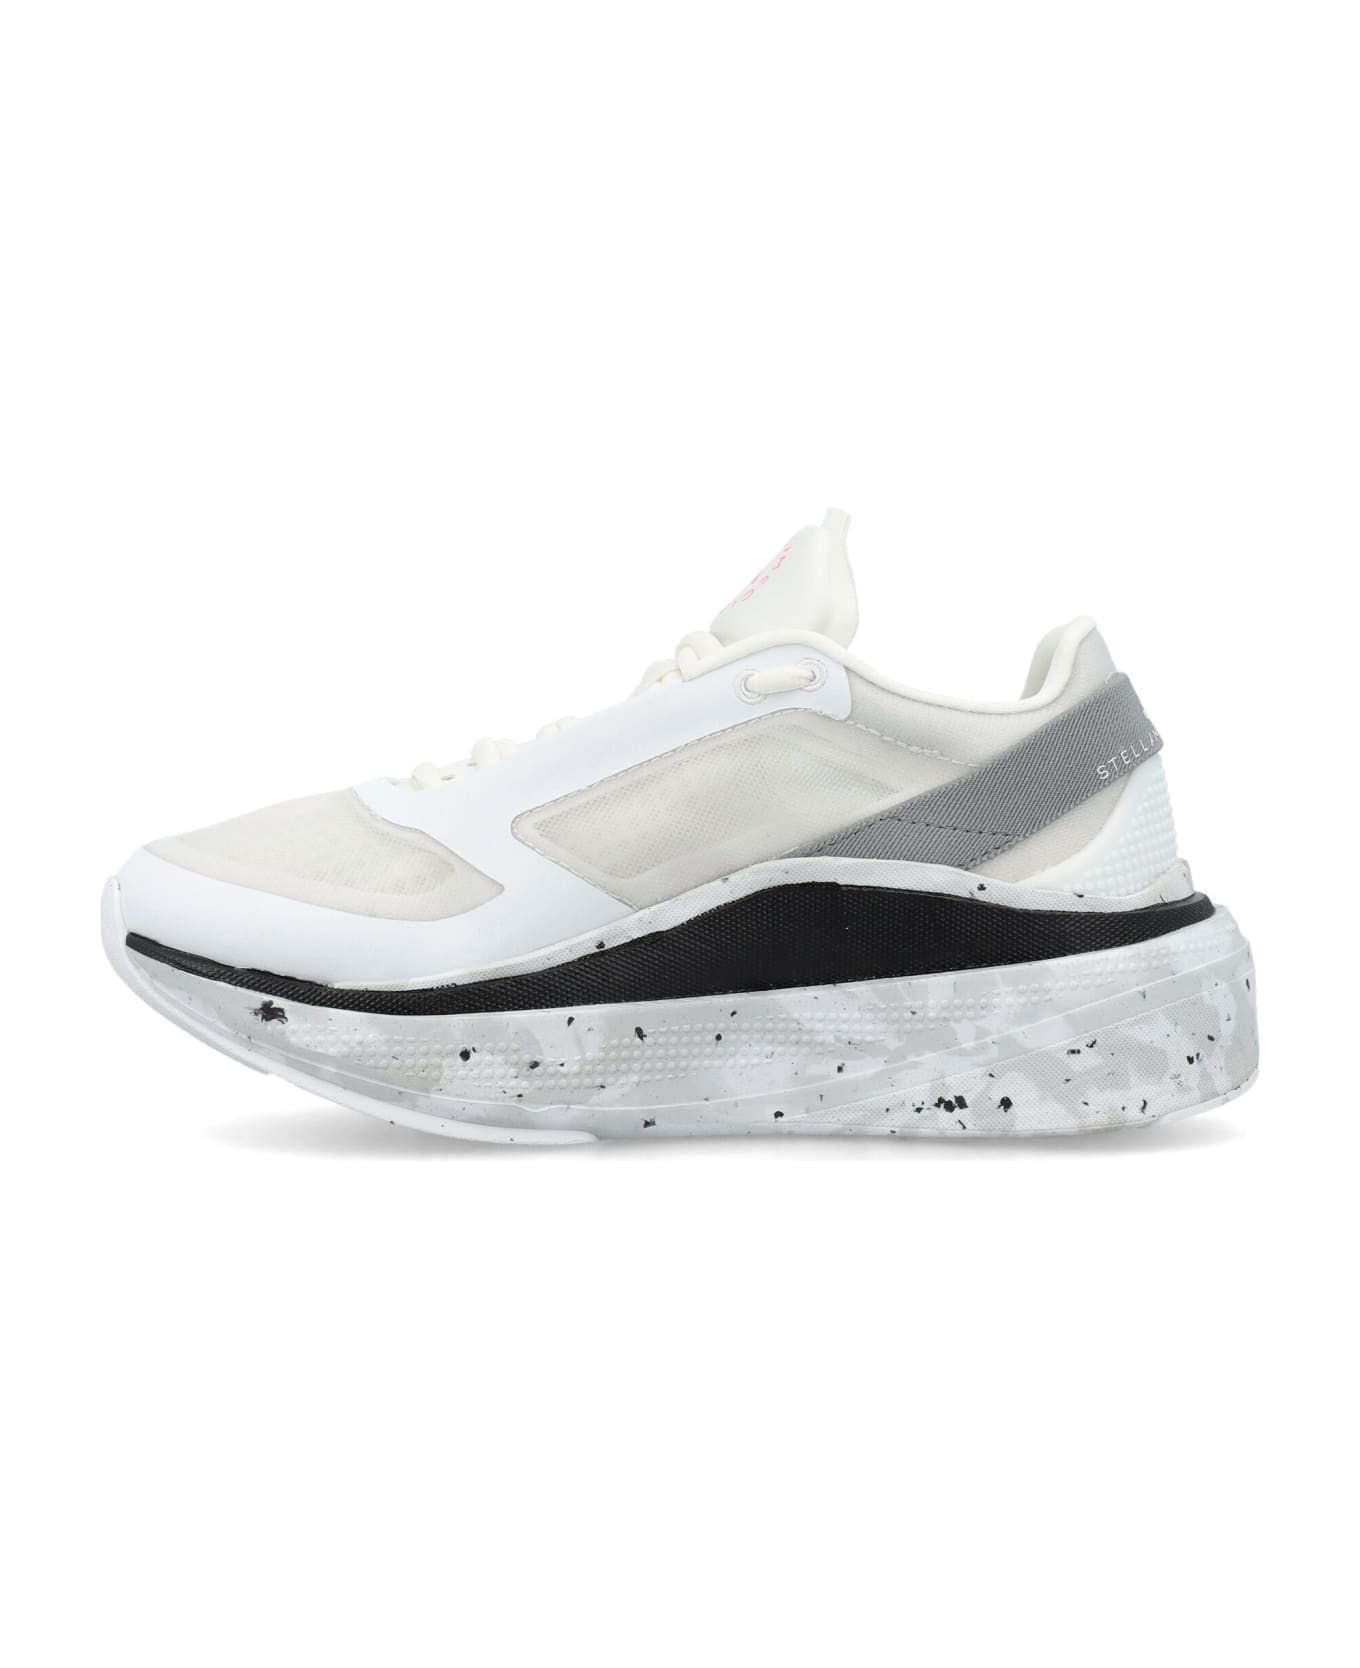 Adidas by Stella McCartney Woman's Eartlight Mesh Running Shoes - WHITE